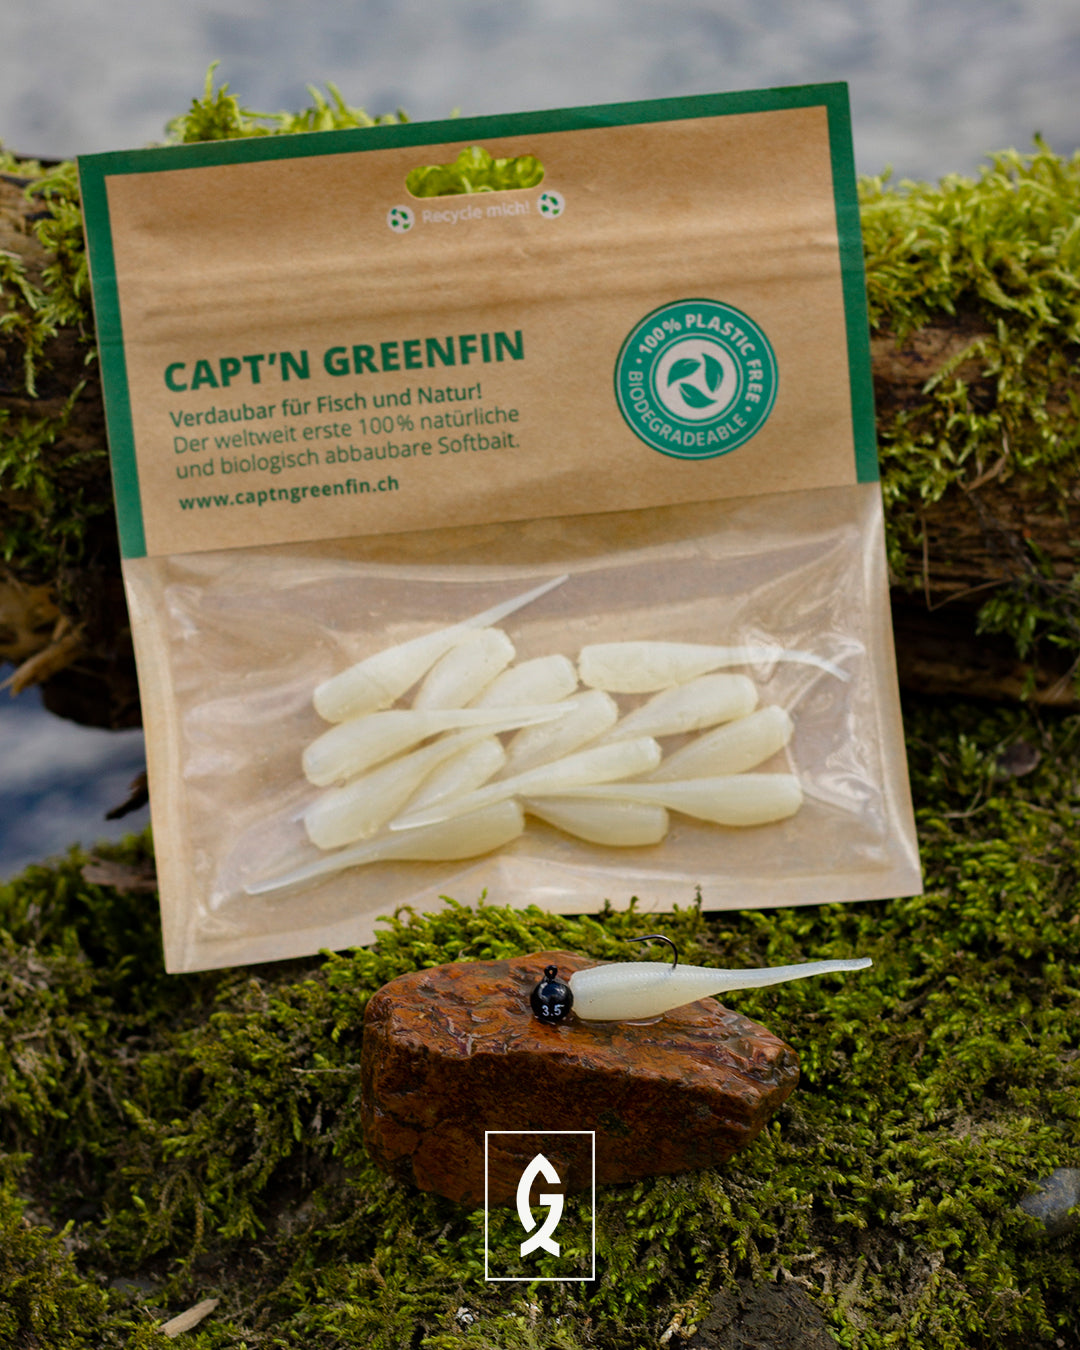 Greenfin Softbait Bundle – Capt'n Greenfin